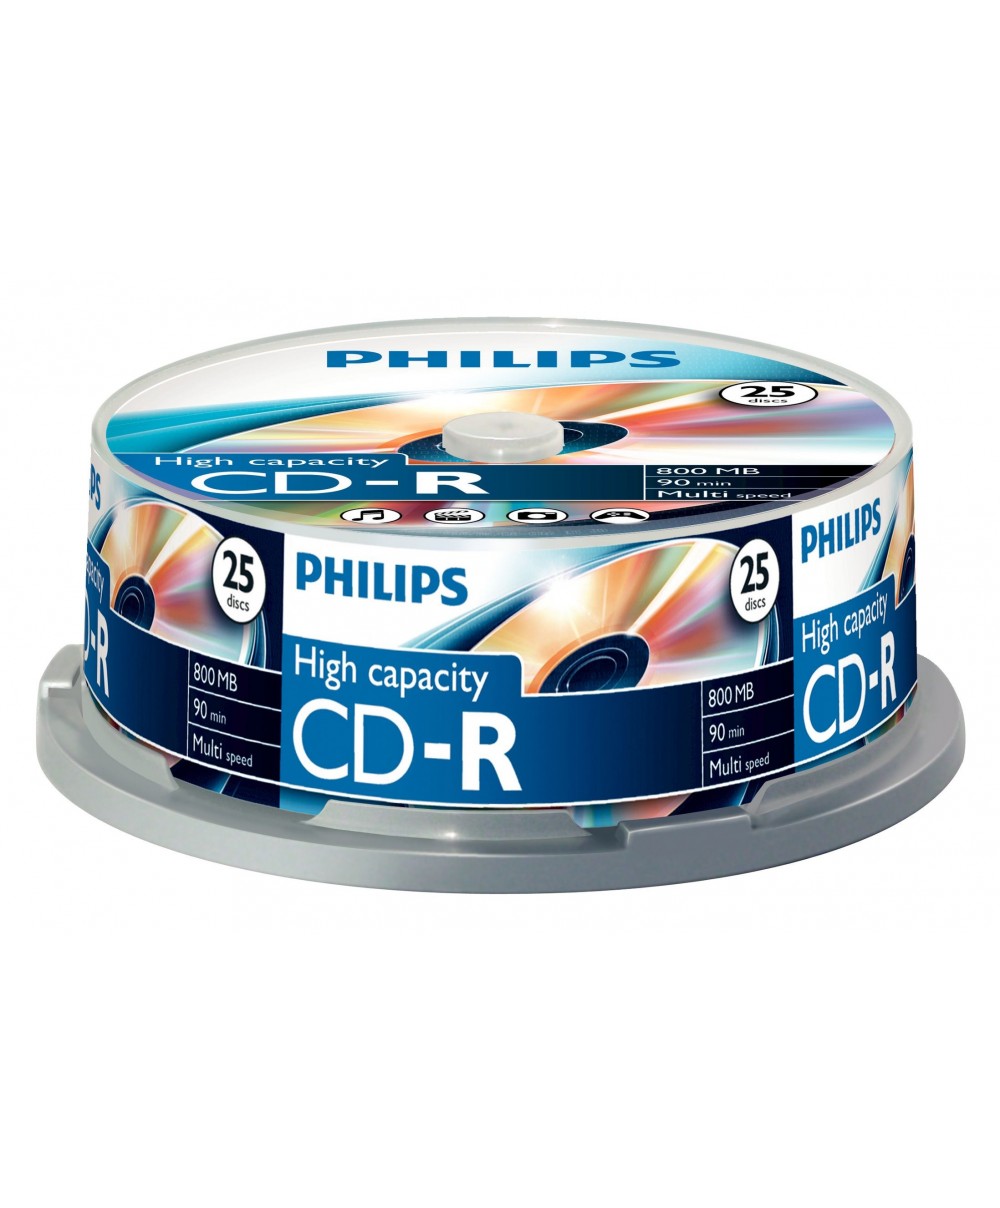 1x25 Philips CD-R 90Min 800MB 40x SP CD-R 12cm